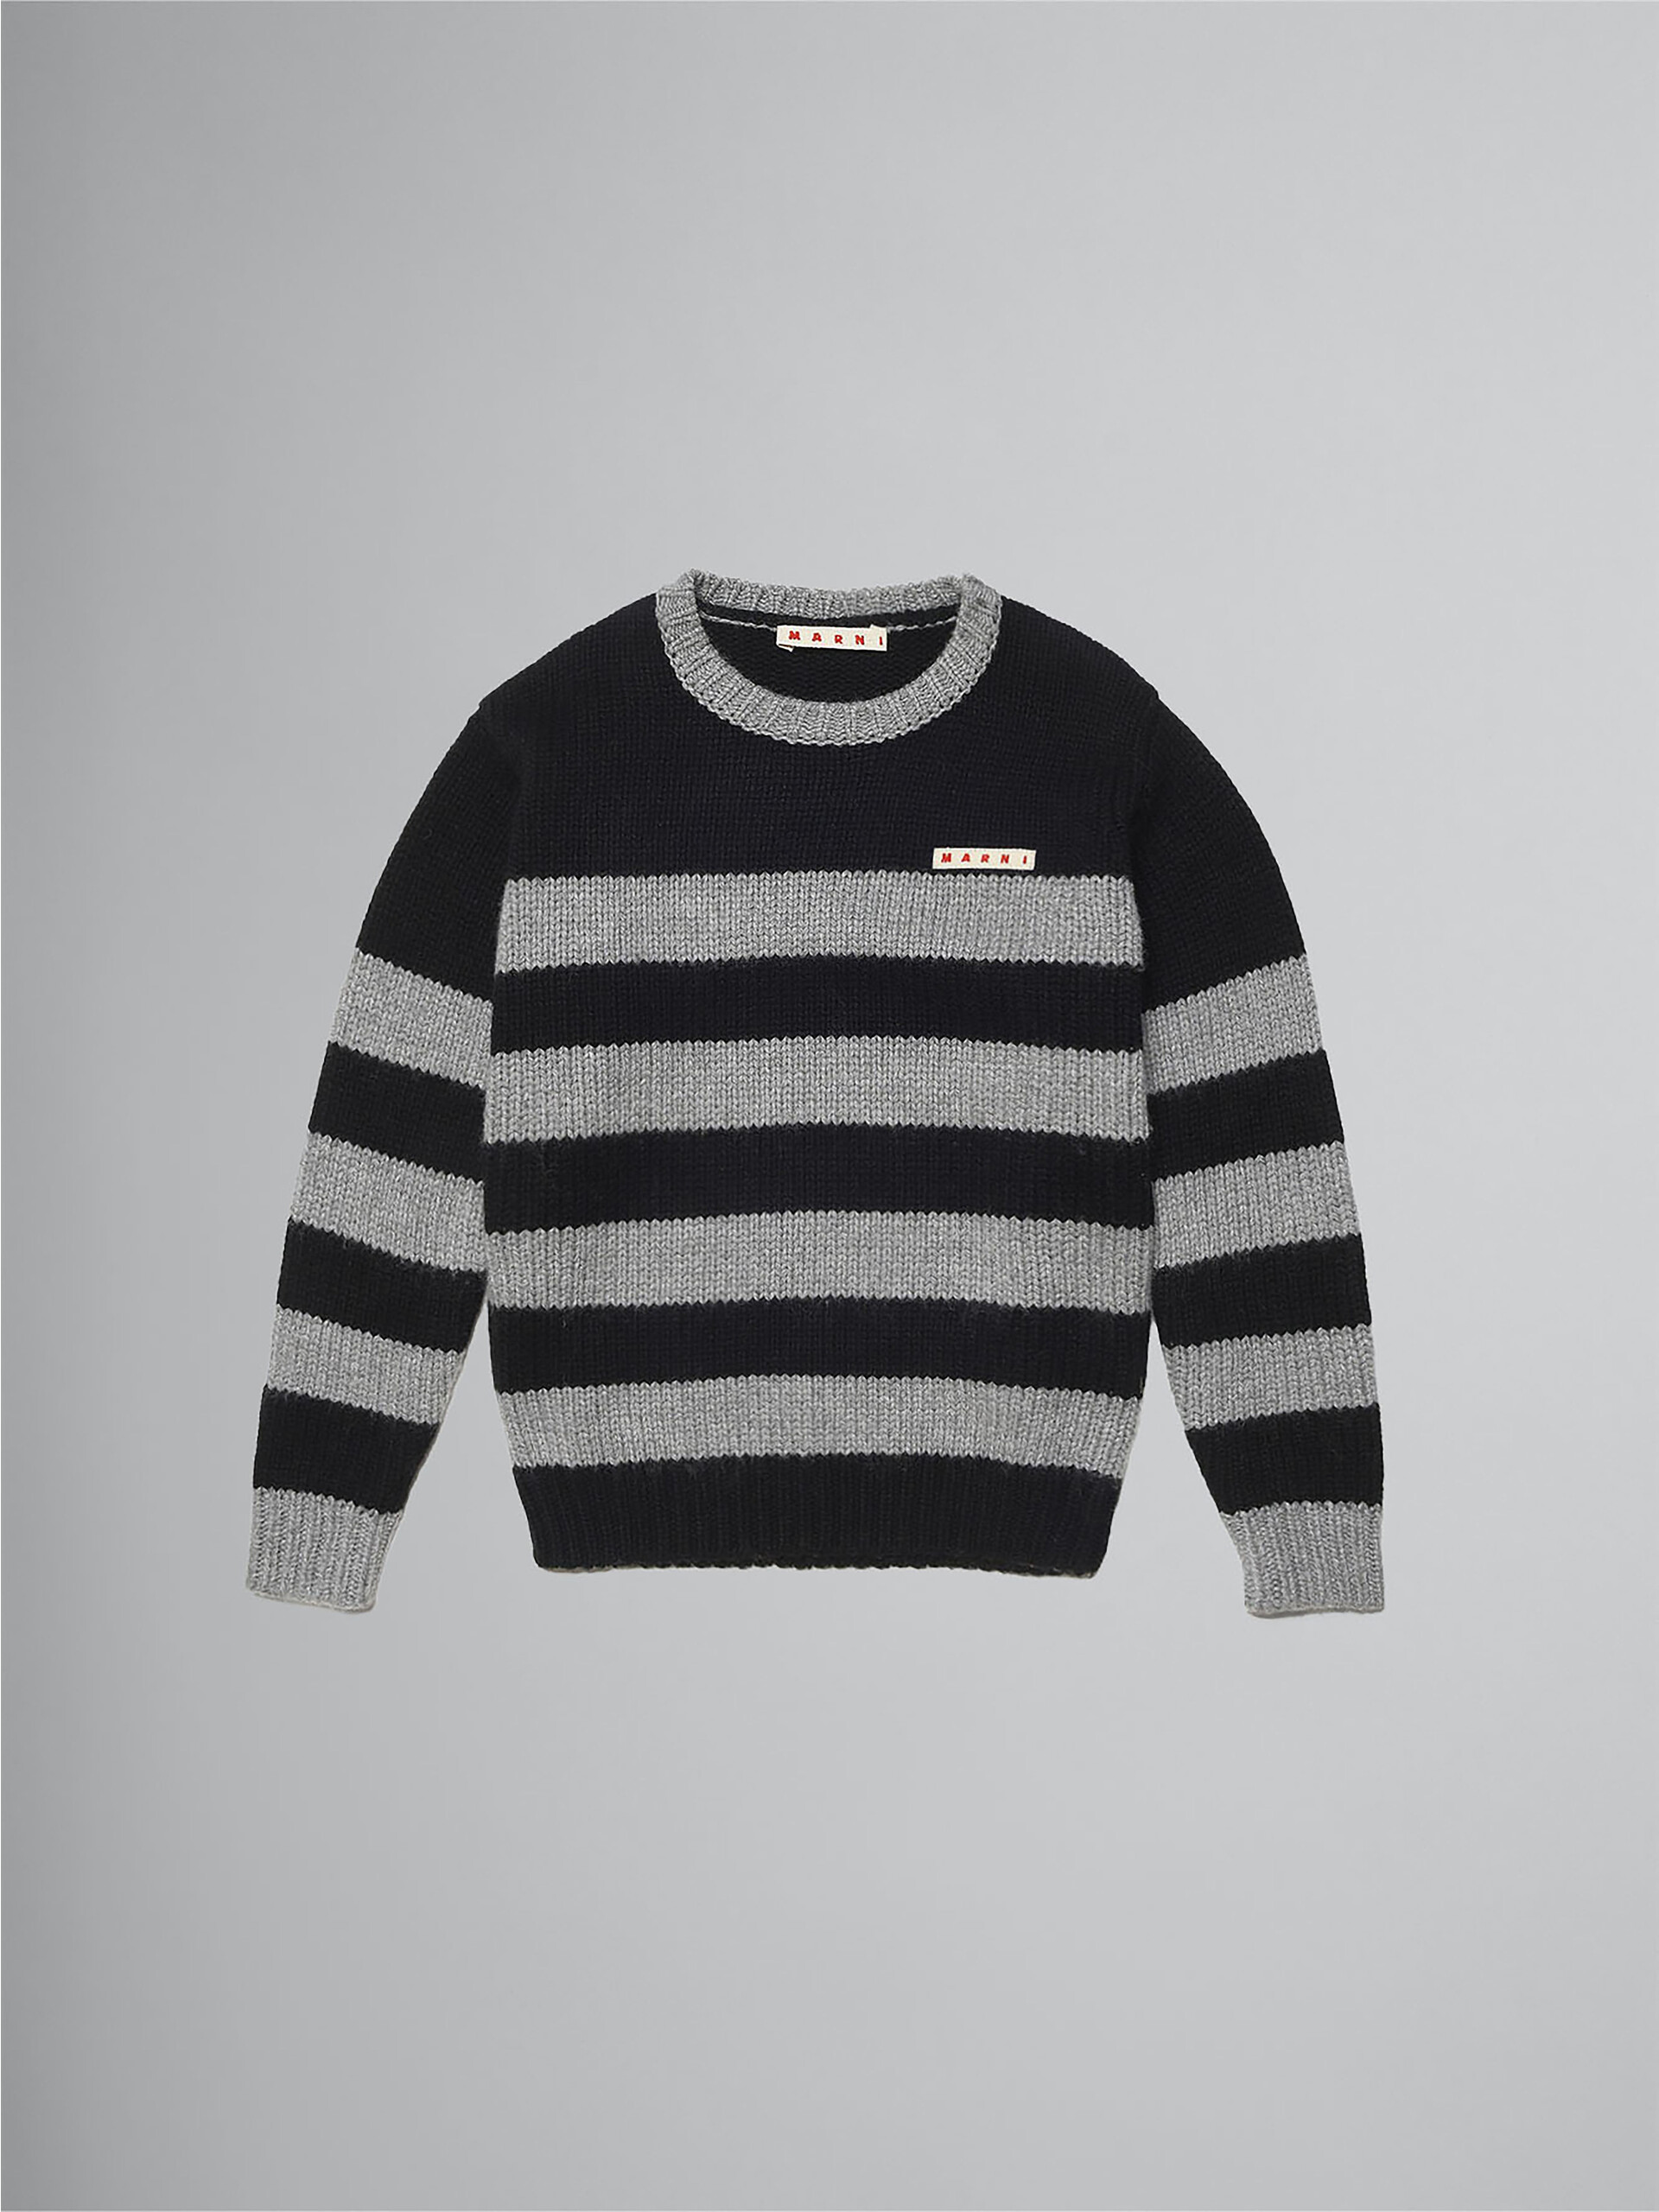 Striped crewneck jumper - Knitwear - Image 1